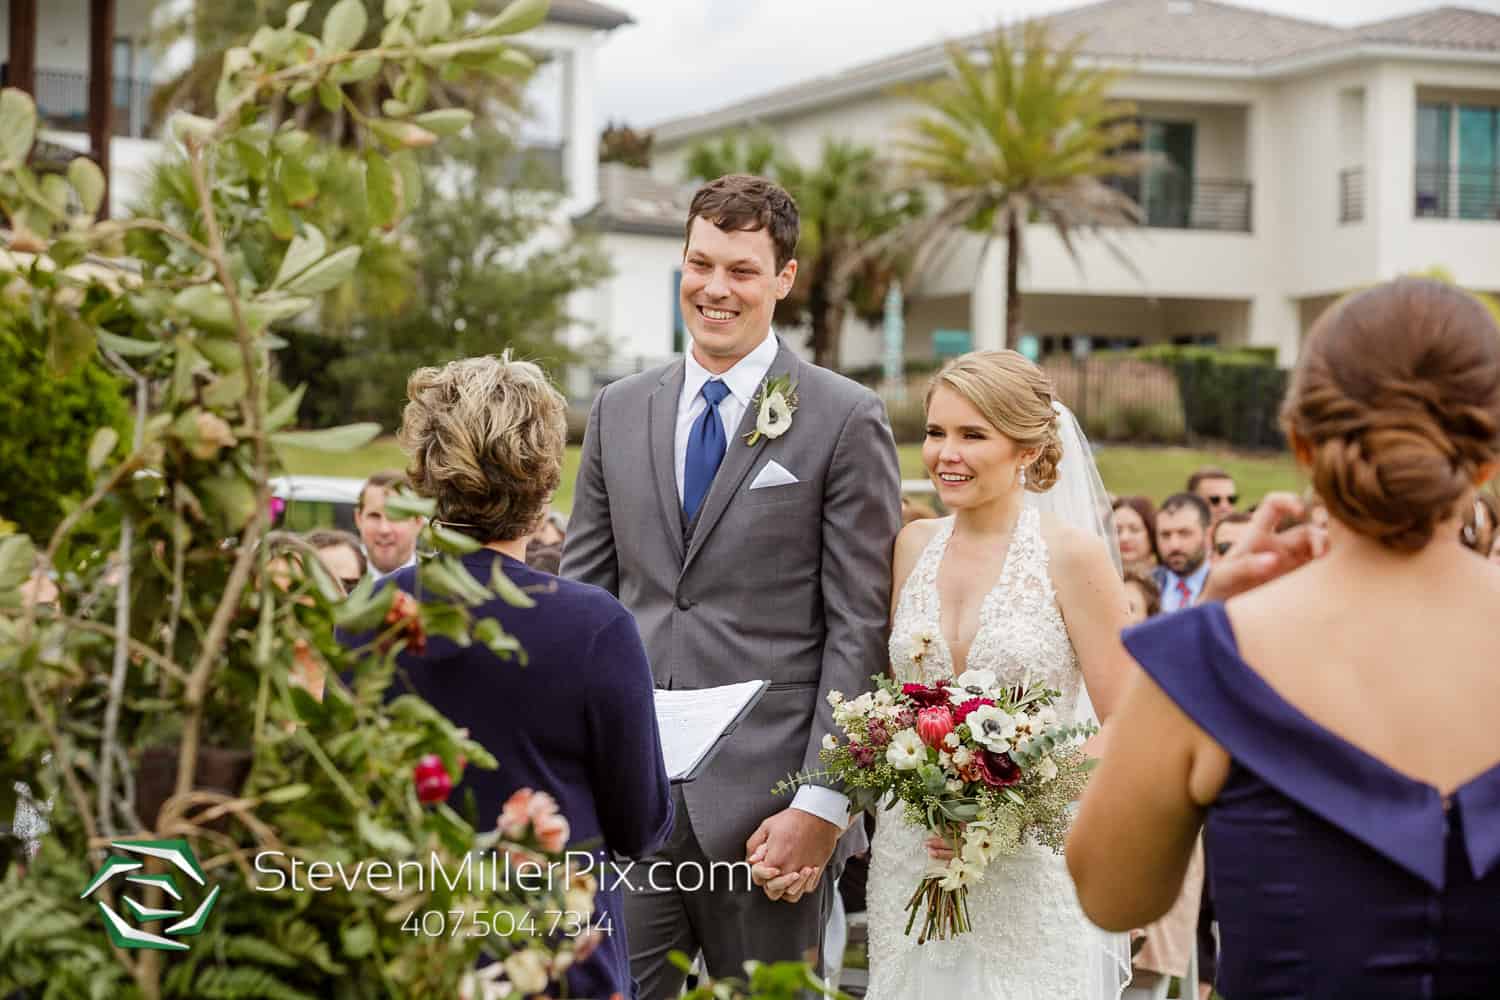 November Wedding - Just Marry Weddings - Steven Miller Photography - Ceremony